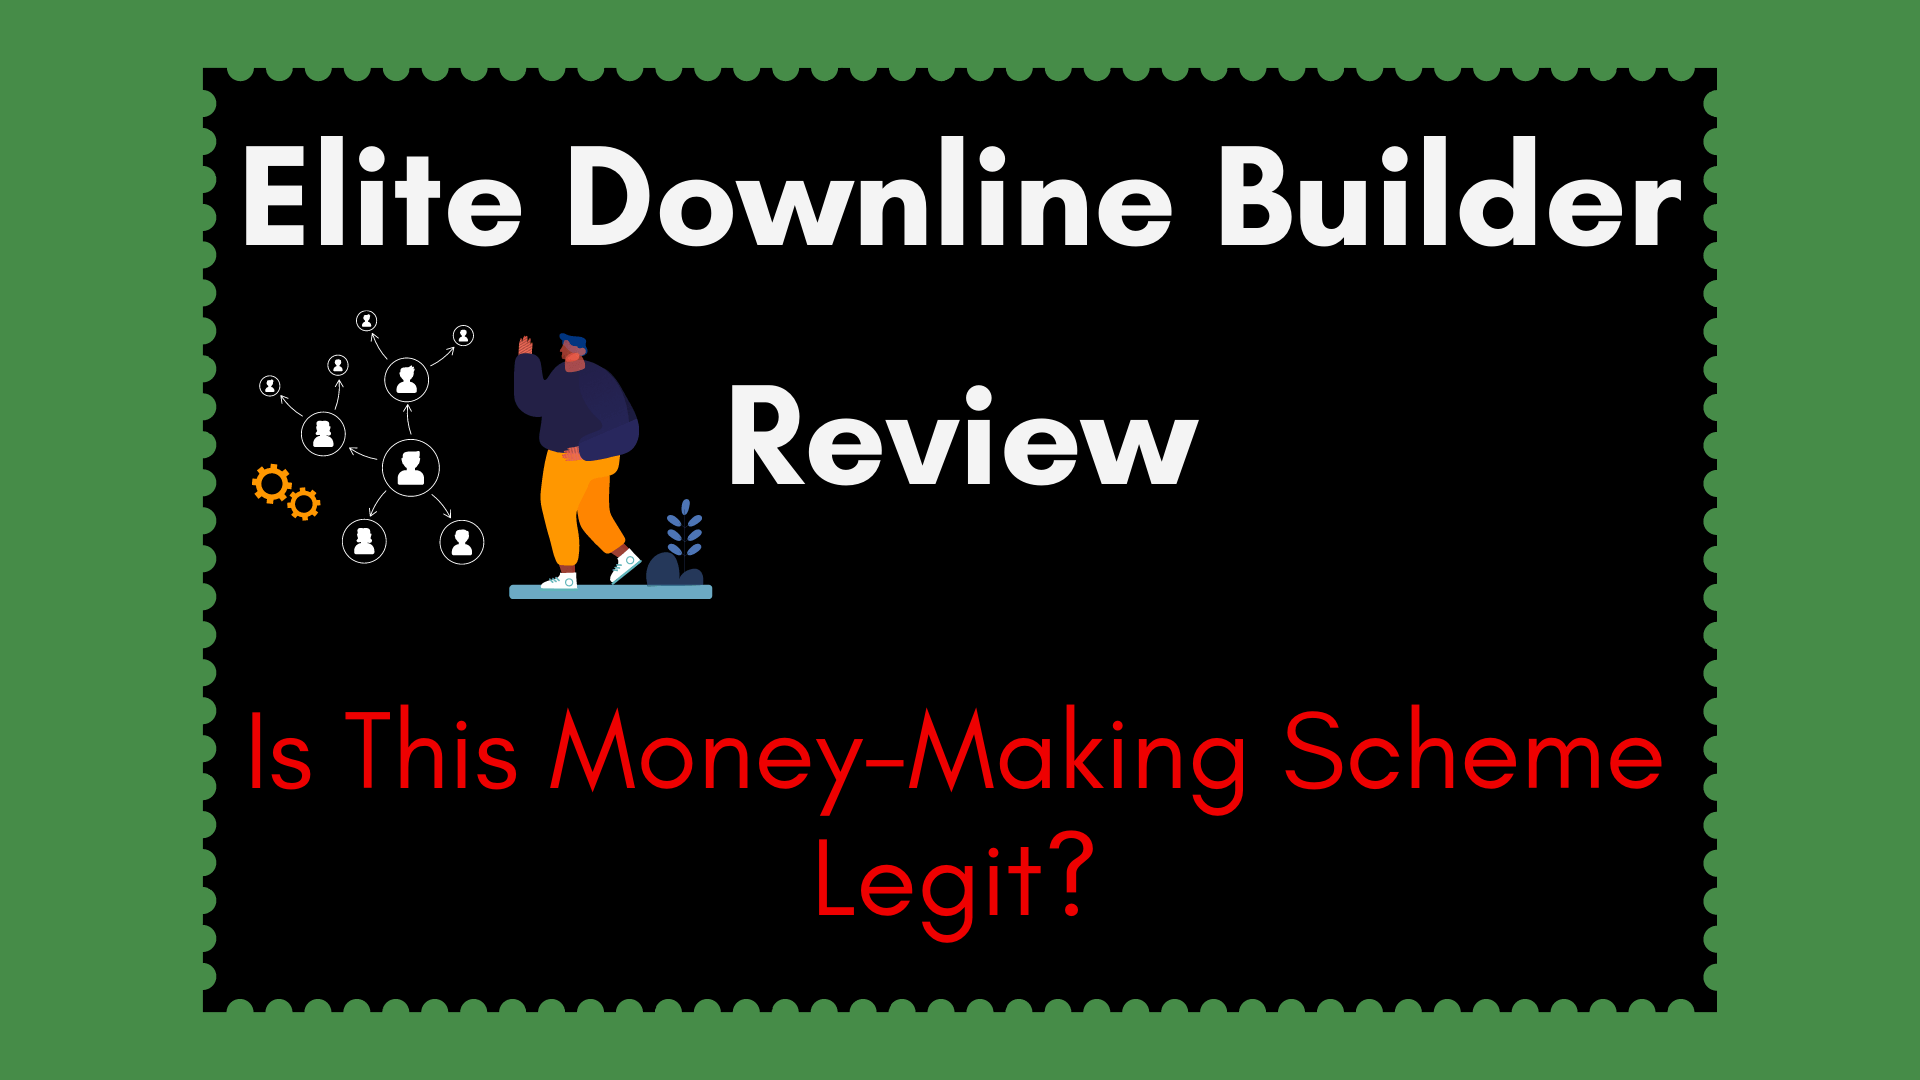 Elite Downline Builder Review